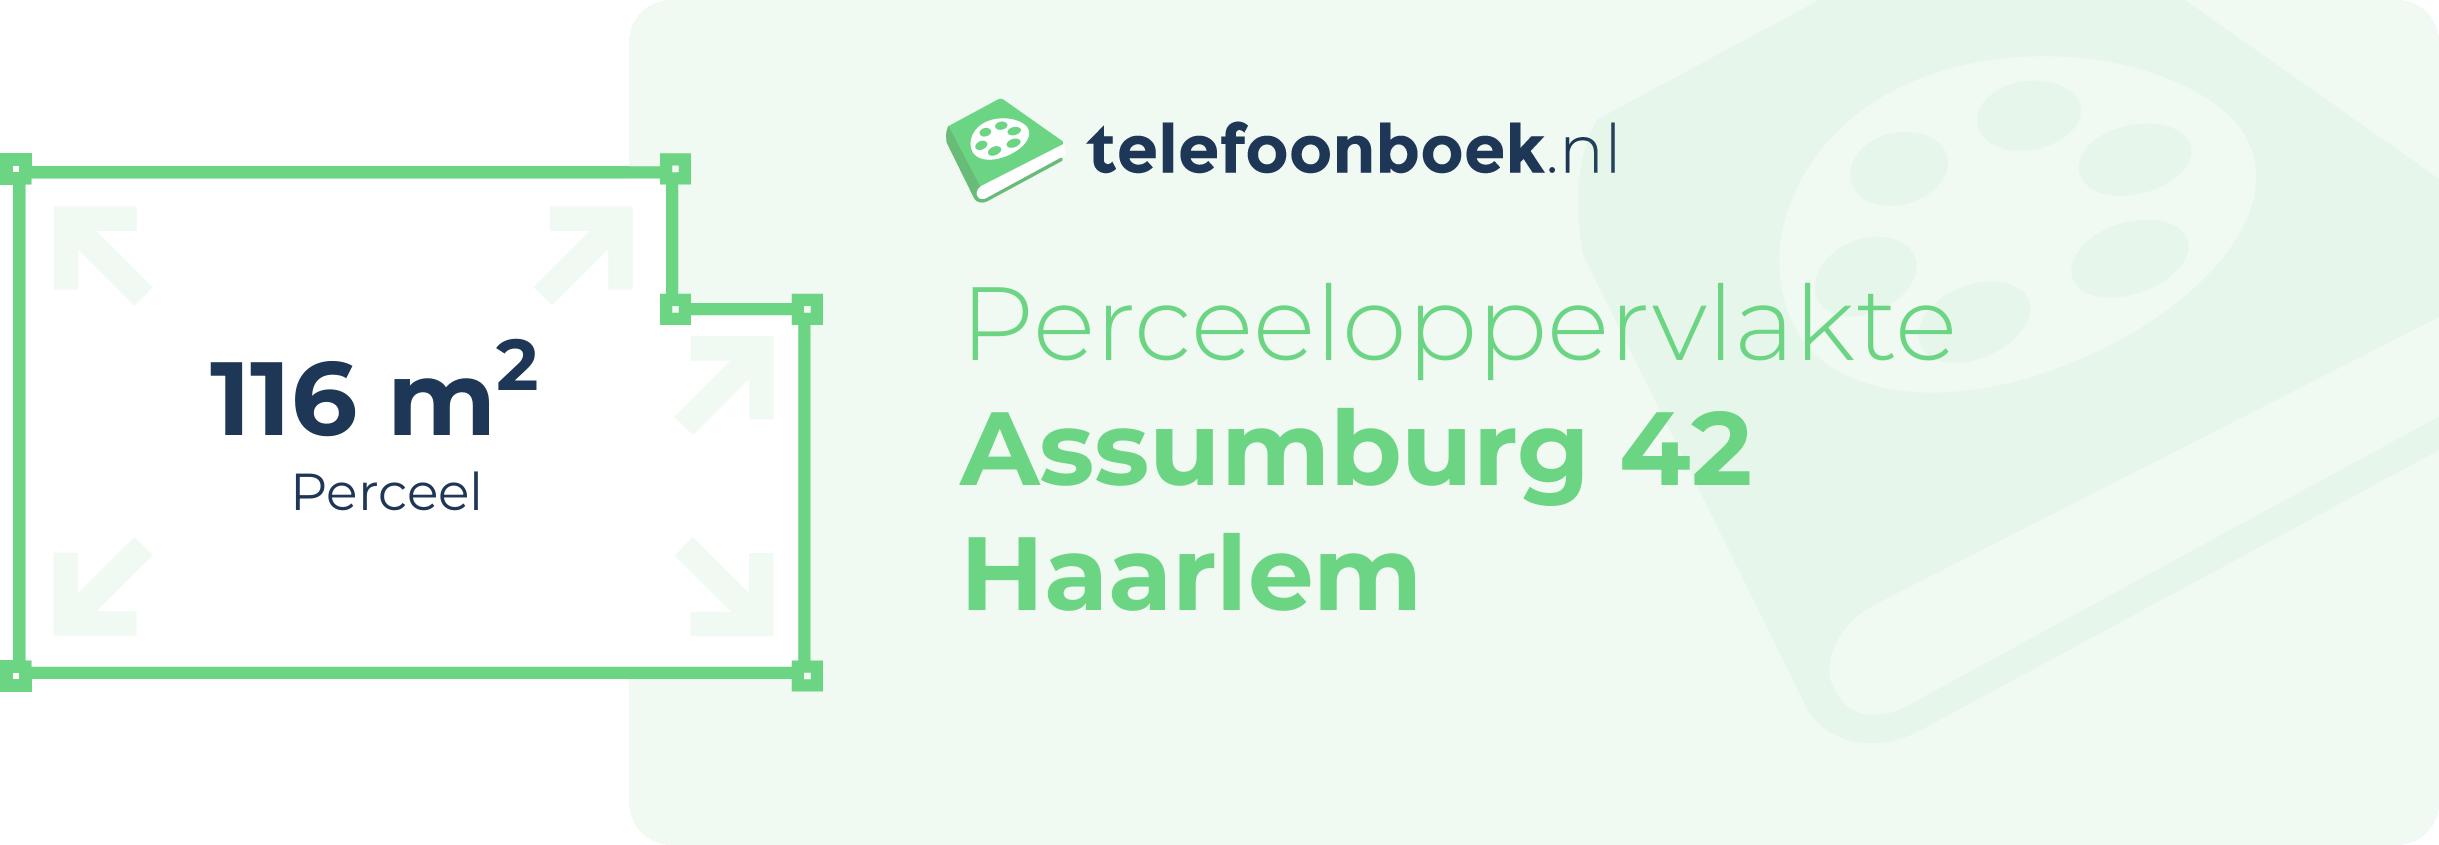 Perceeloppervlakte Assumburg 42 Haarlem